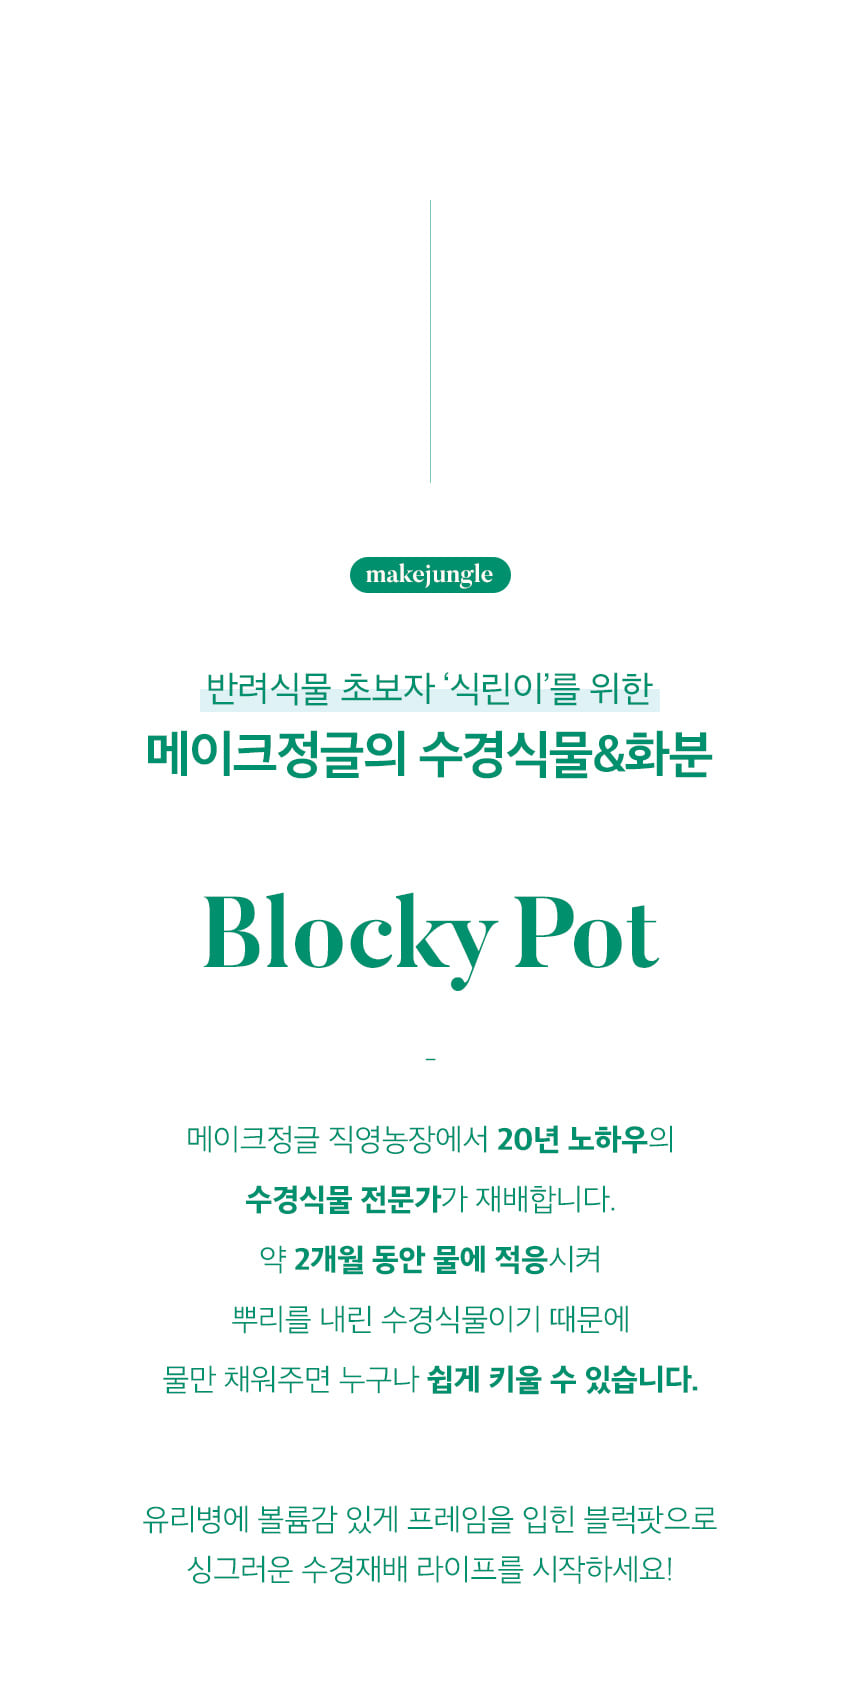 blocky_02.jpg